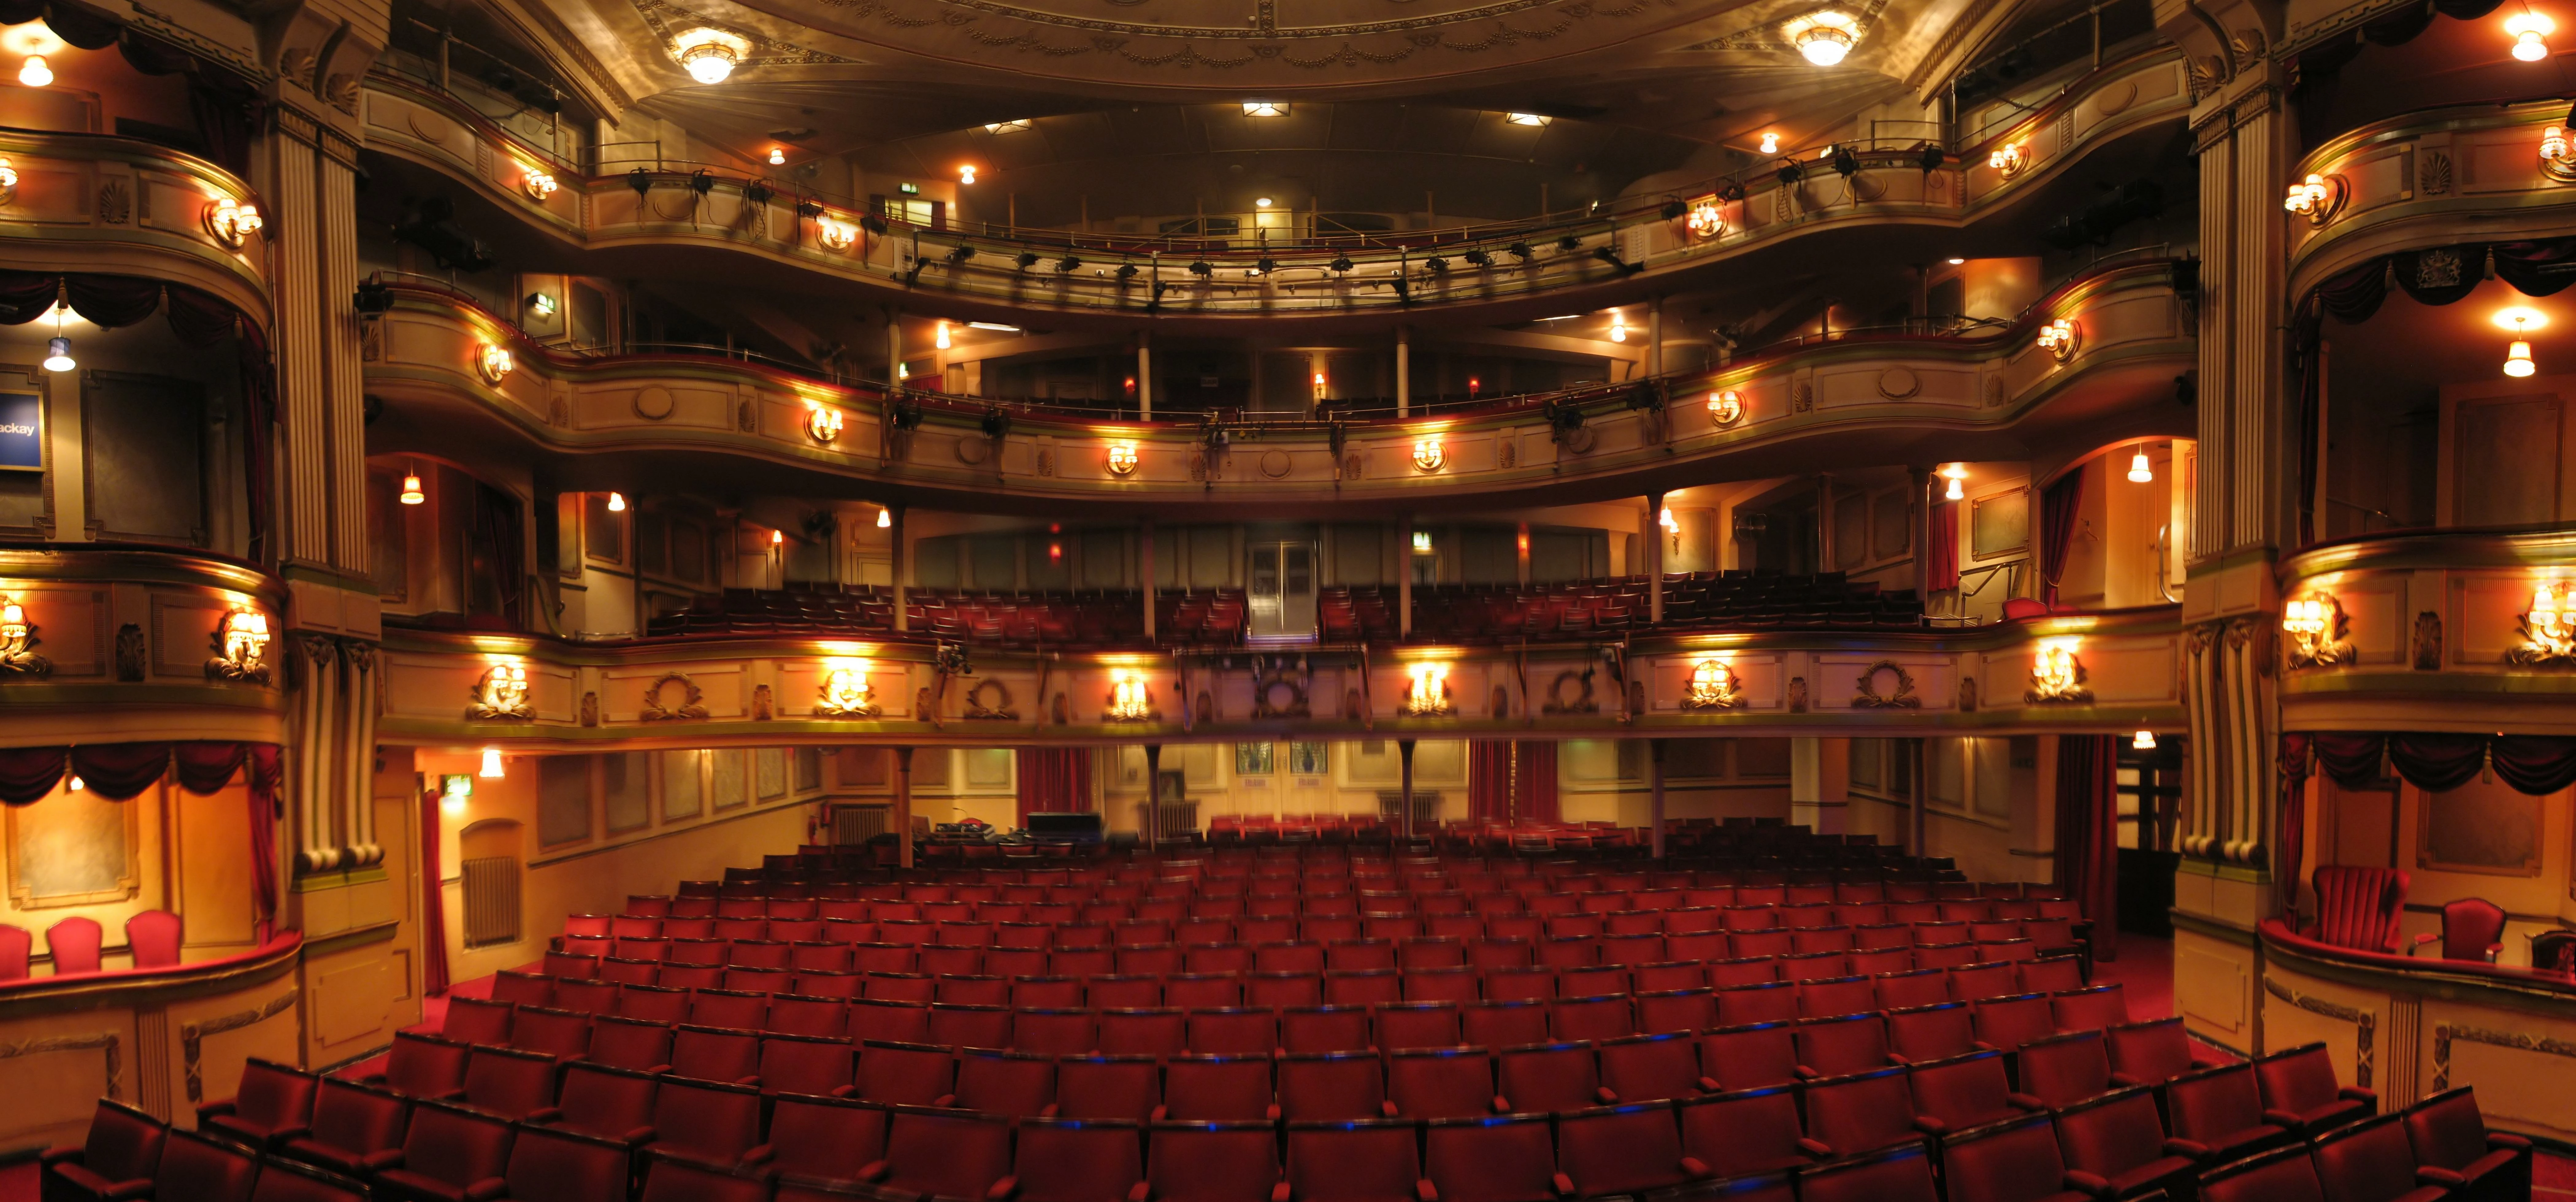 Theatre Royal Panorama, Brighton, UK